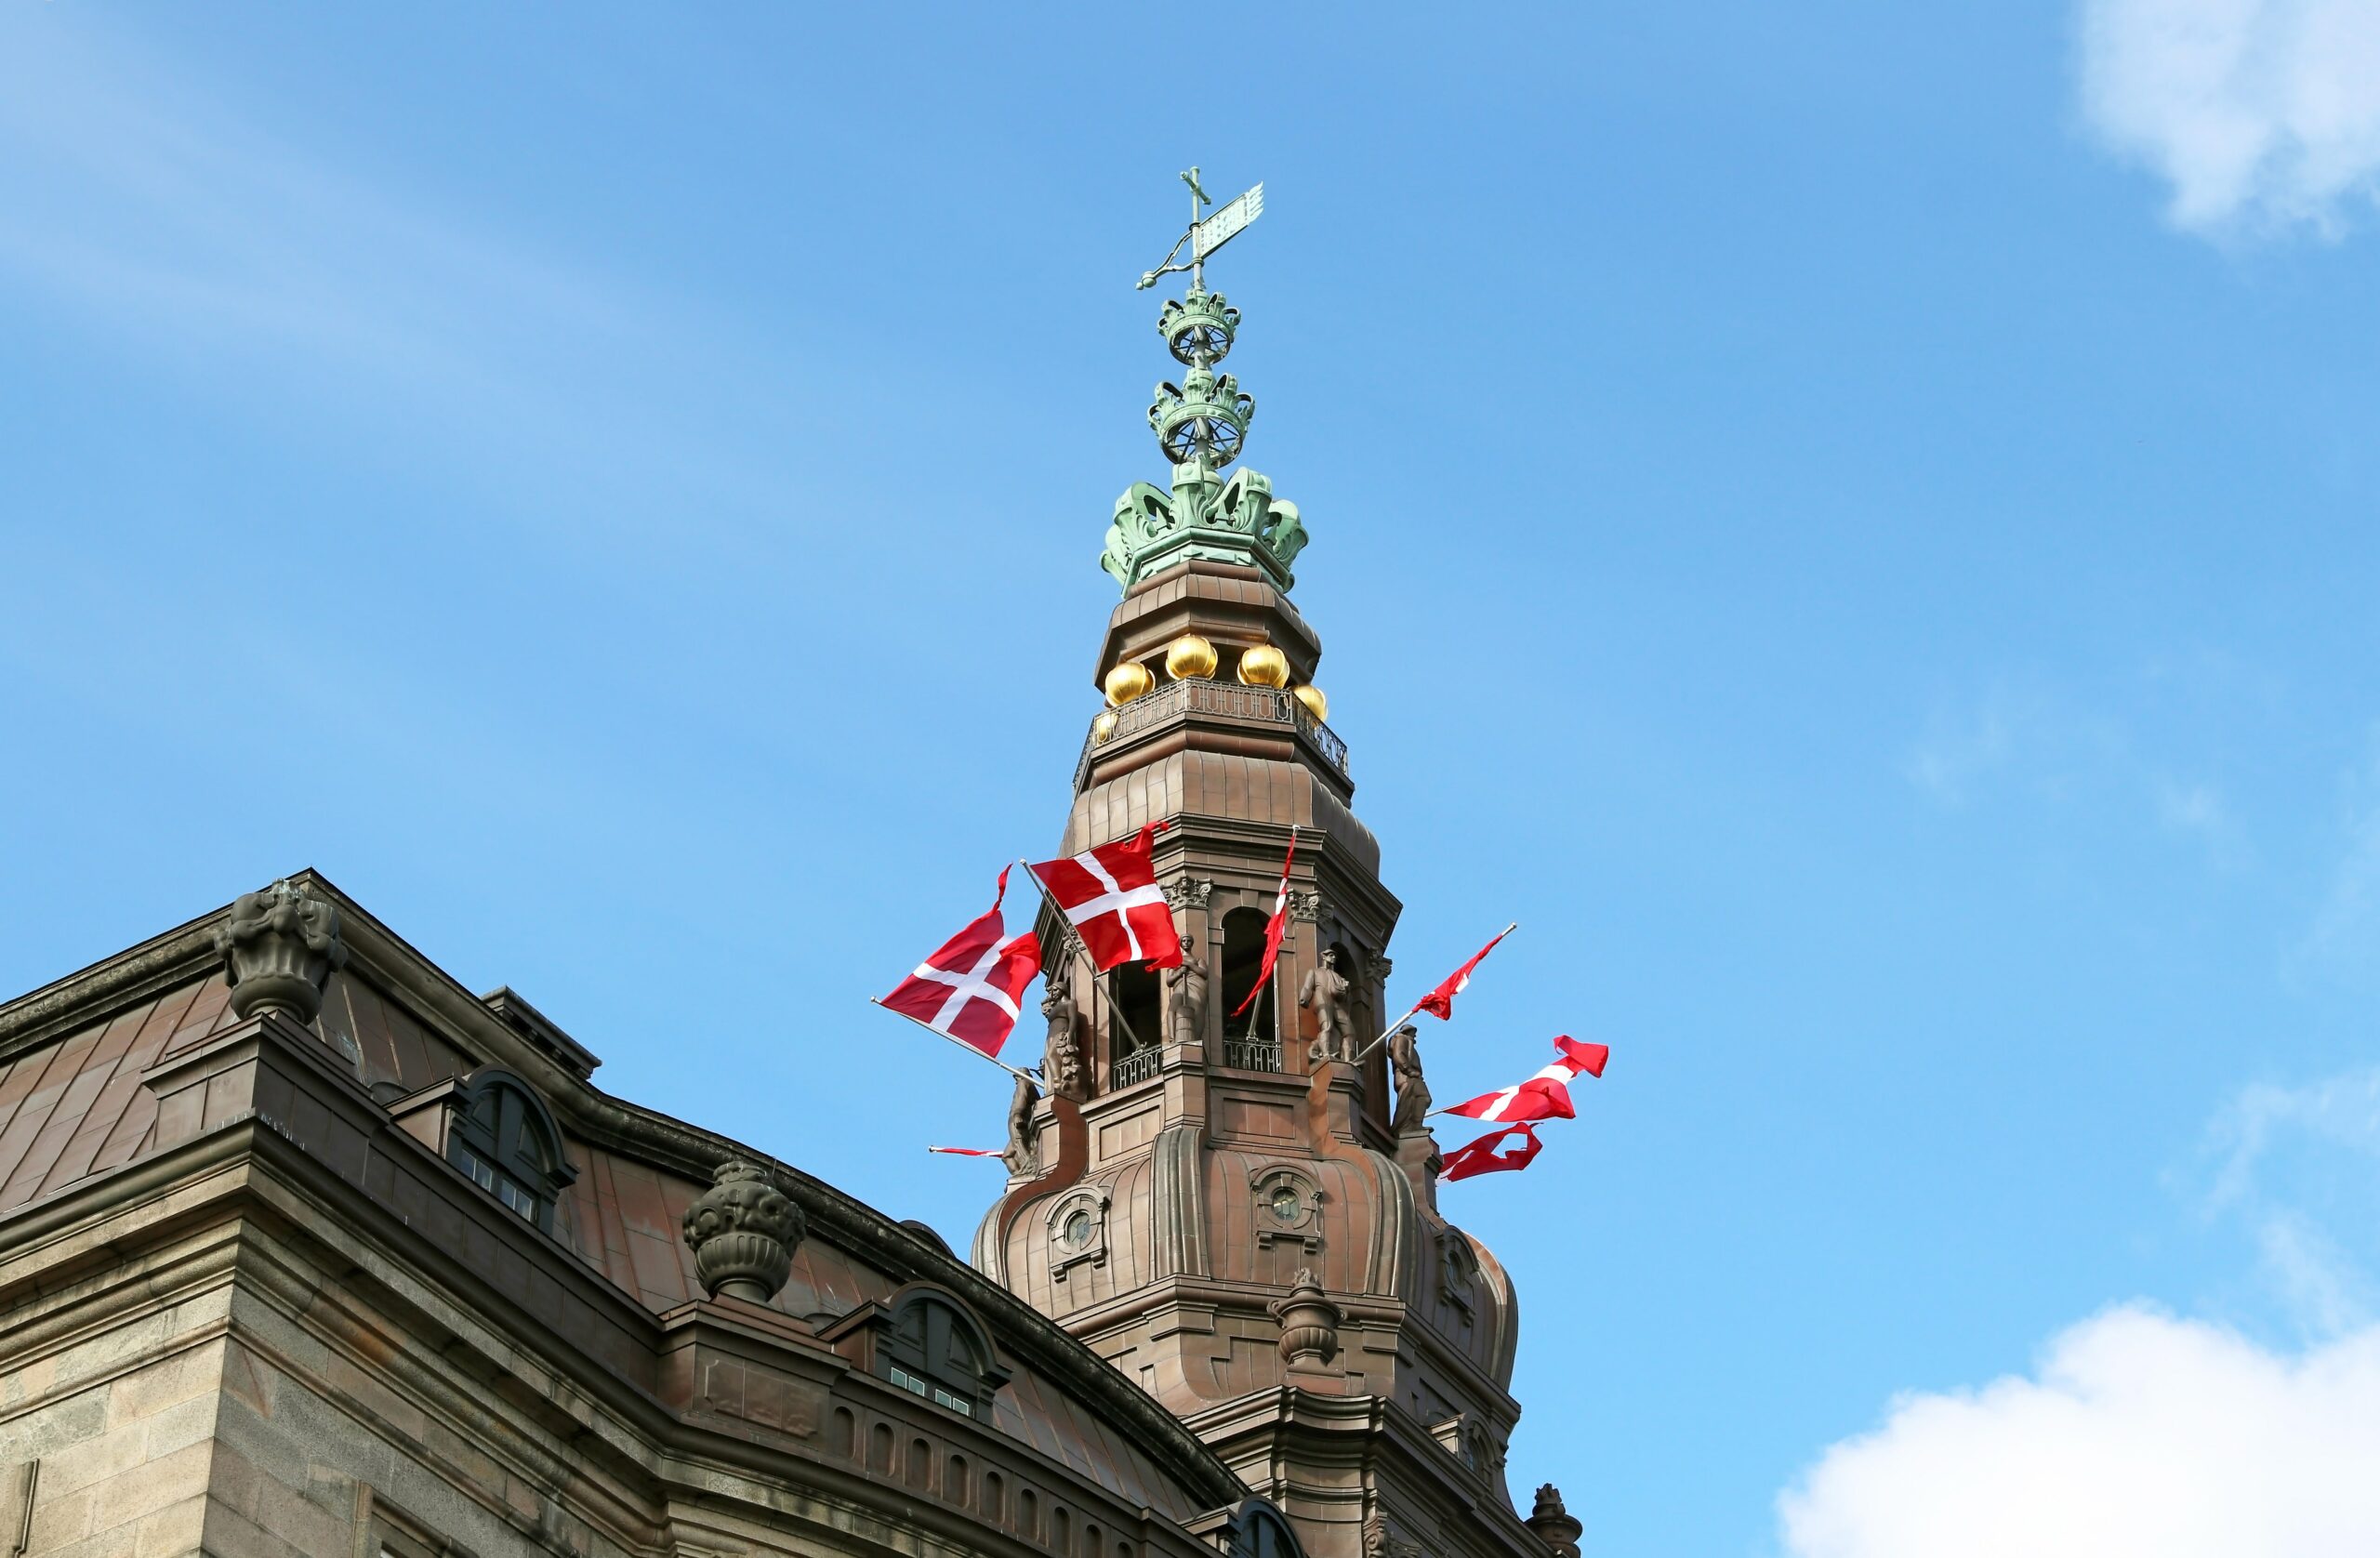 Denmark: Scrap the blasphemy law proposal - Civic Space